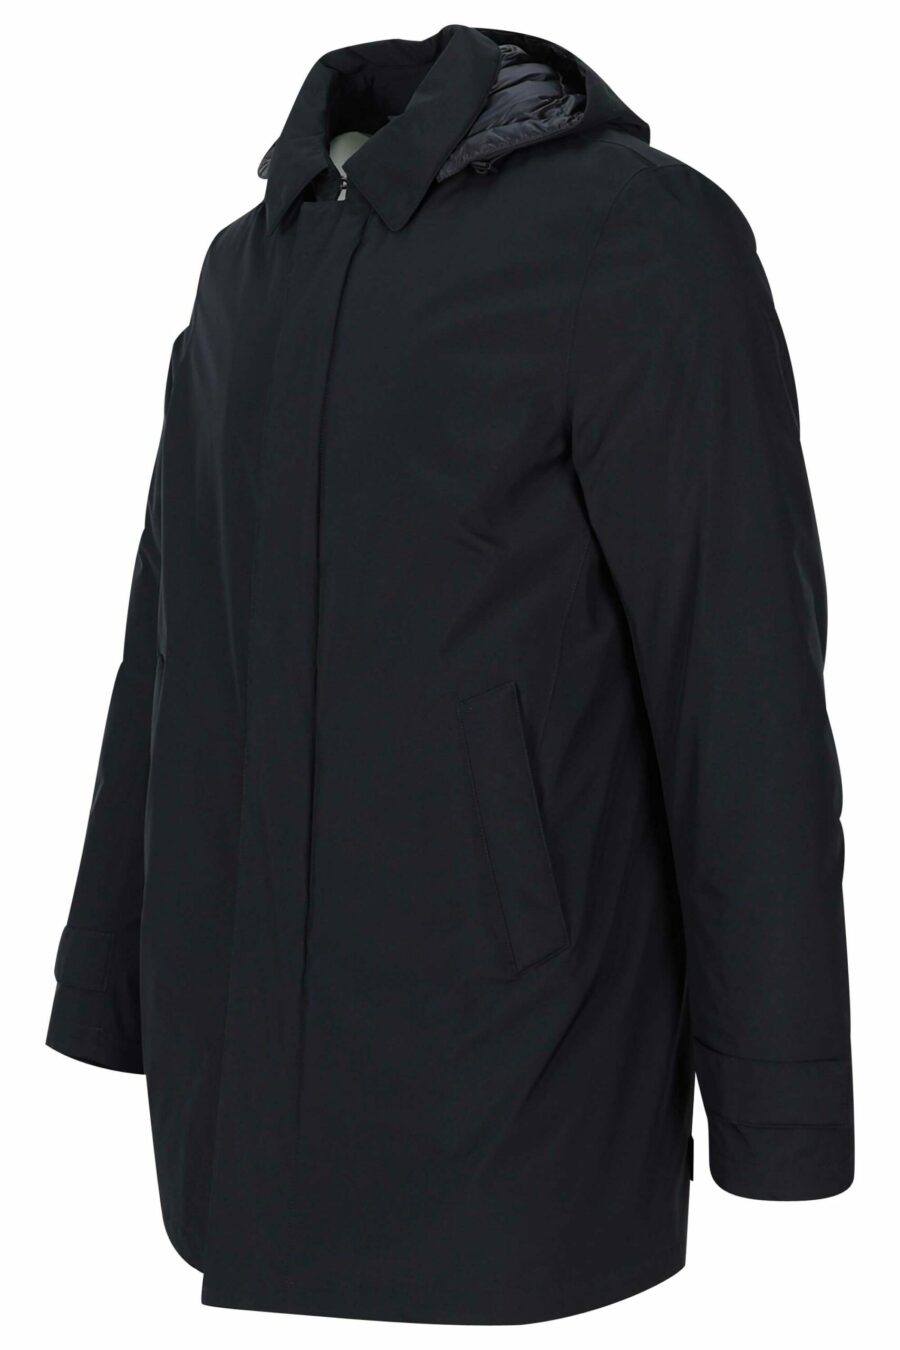 Gore tex" schwarze Jacke mit abnehmbarer Kapuze - 8055721631509 1 2 skaliert